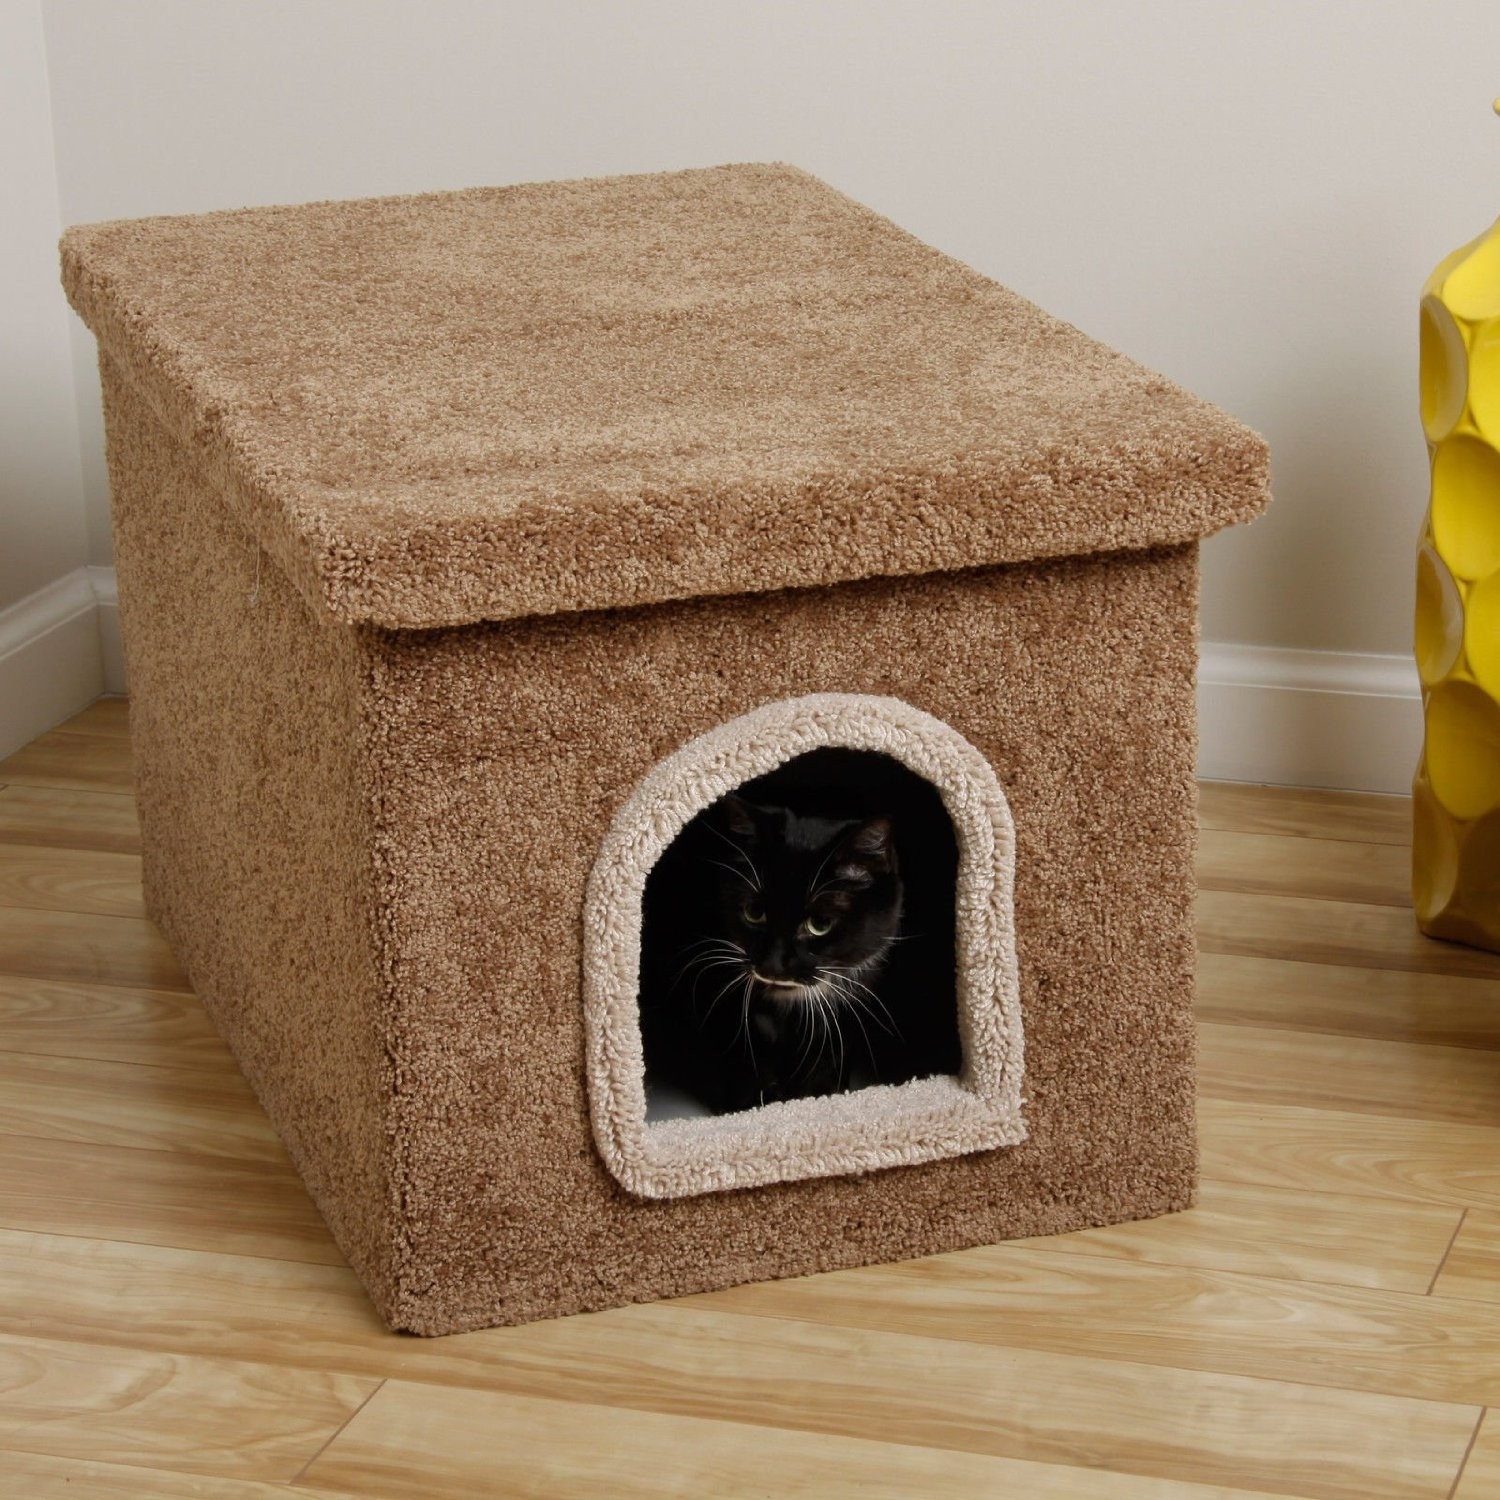 An easy diy cat litter box ideas homesfeed 7